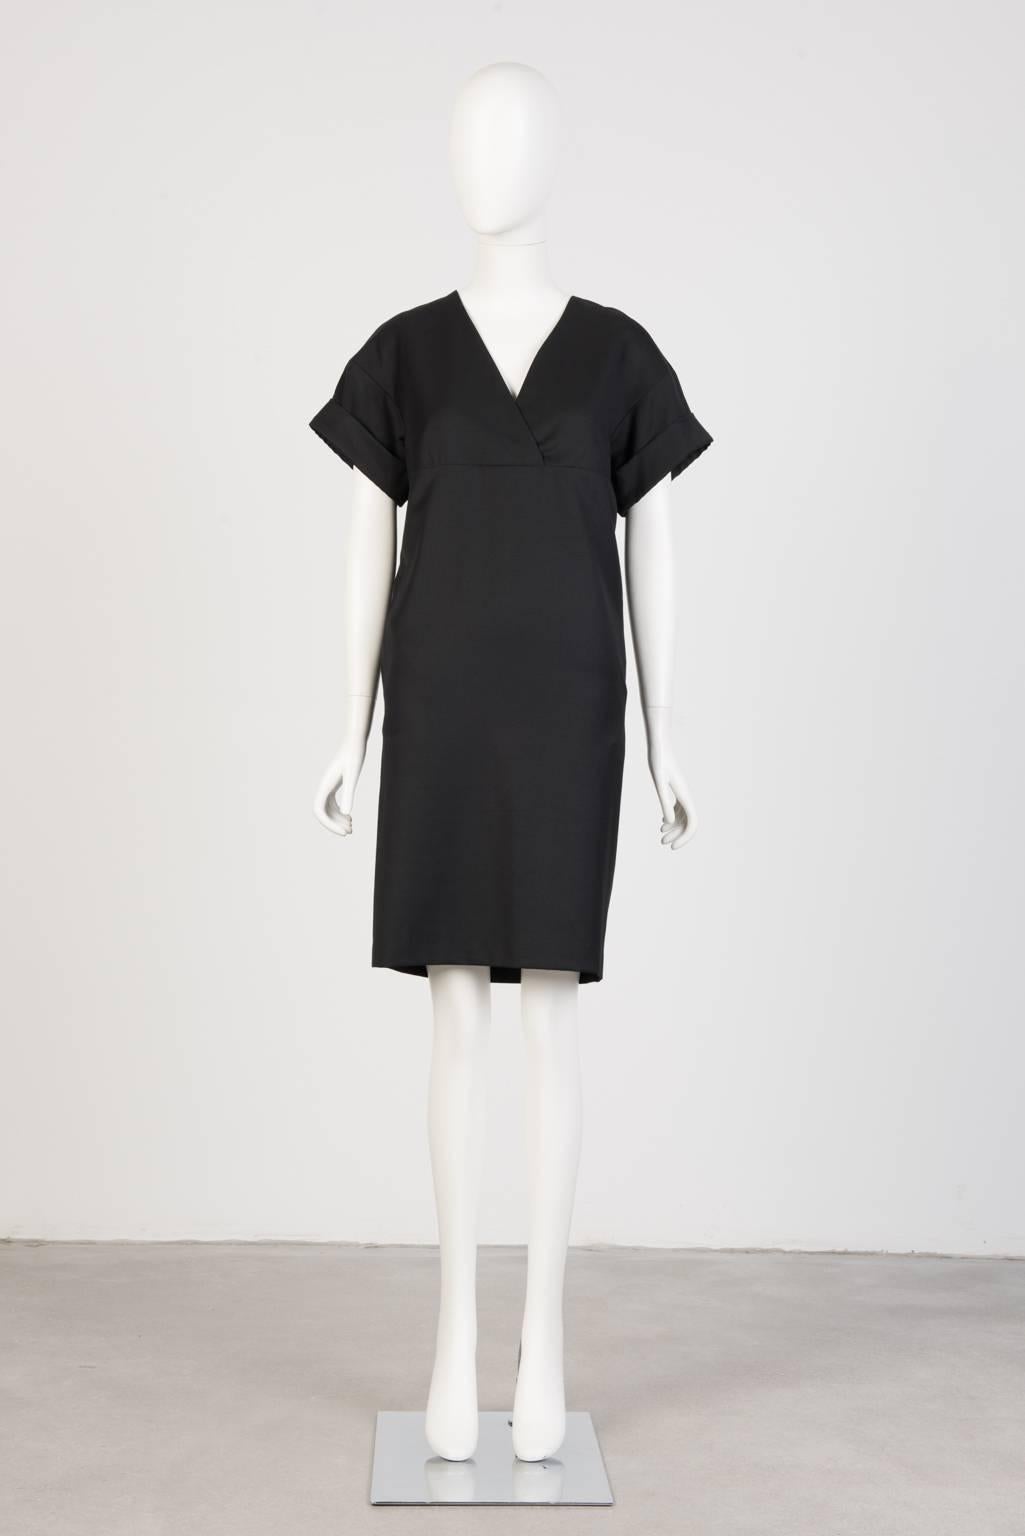 Black, knee-length dress with empire waist and cuffed kimono sleeve in medium weight wool twill.